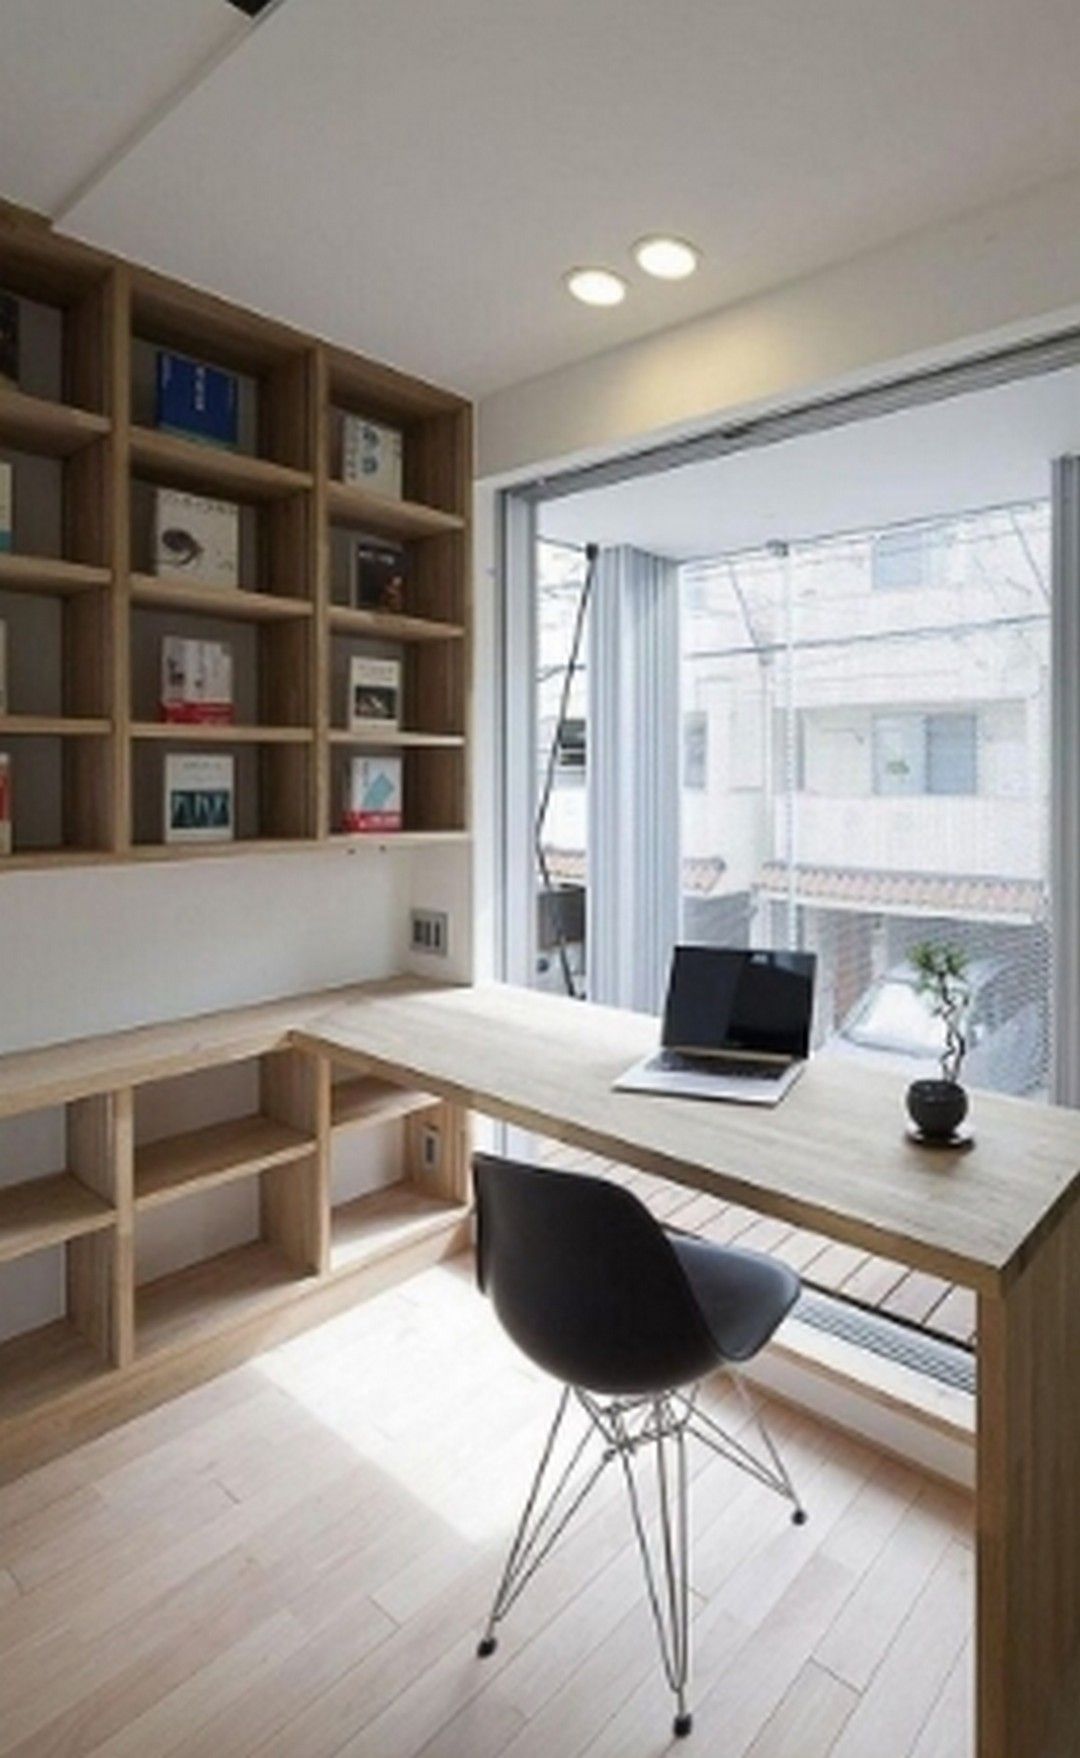 7 Minimalist Home Office Design Ideas For Maximum Productivity